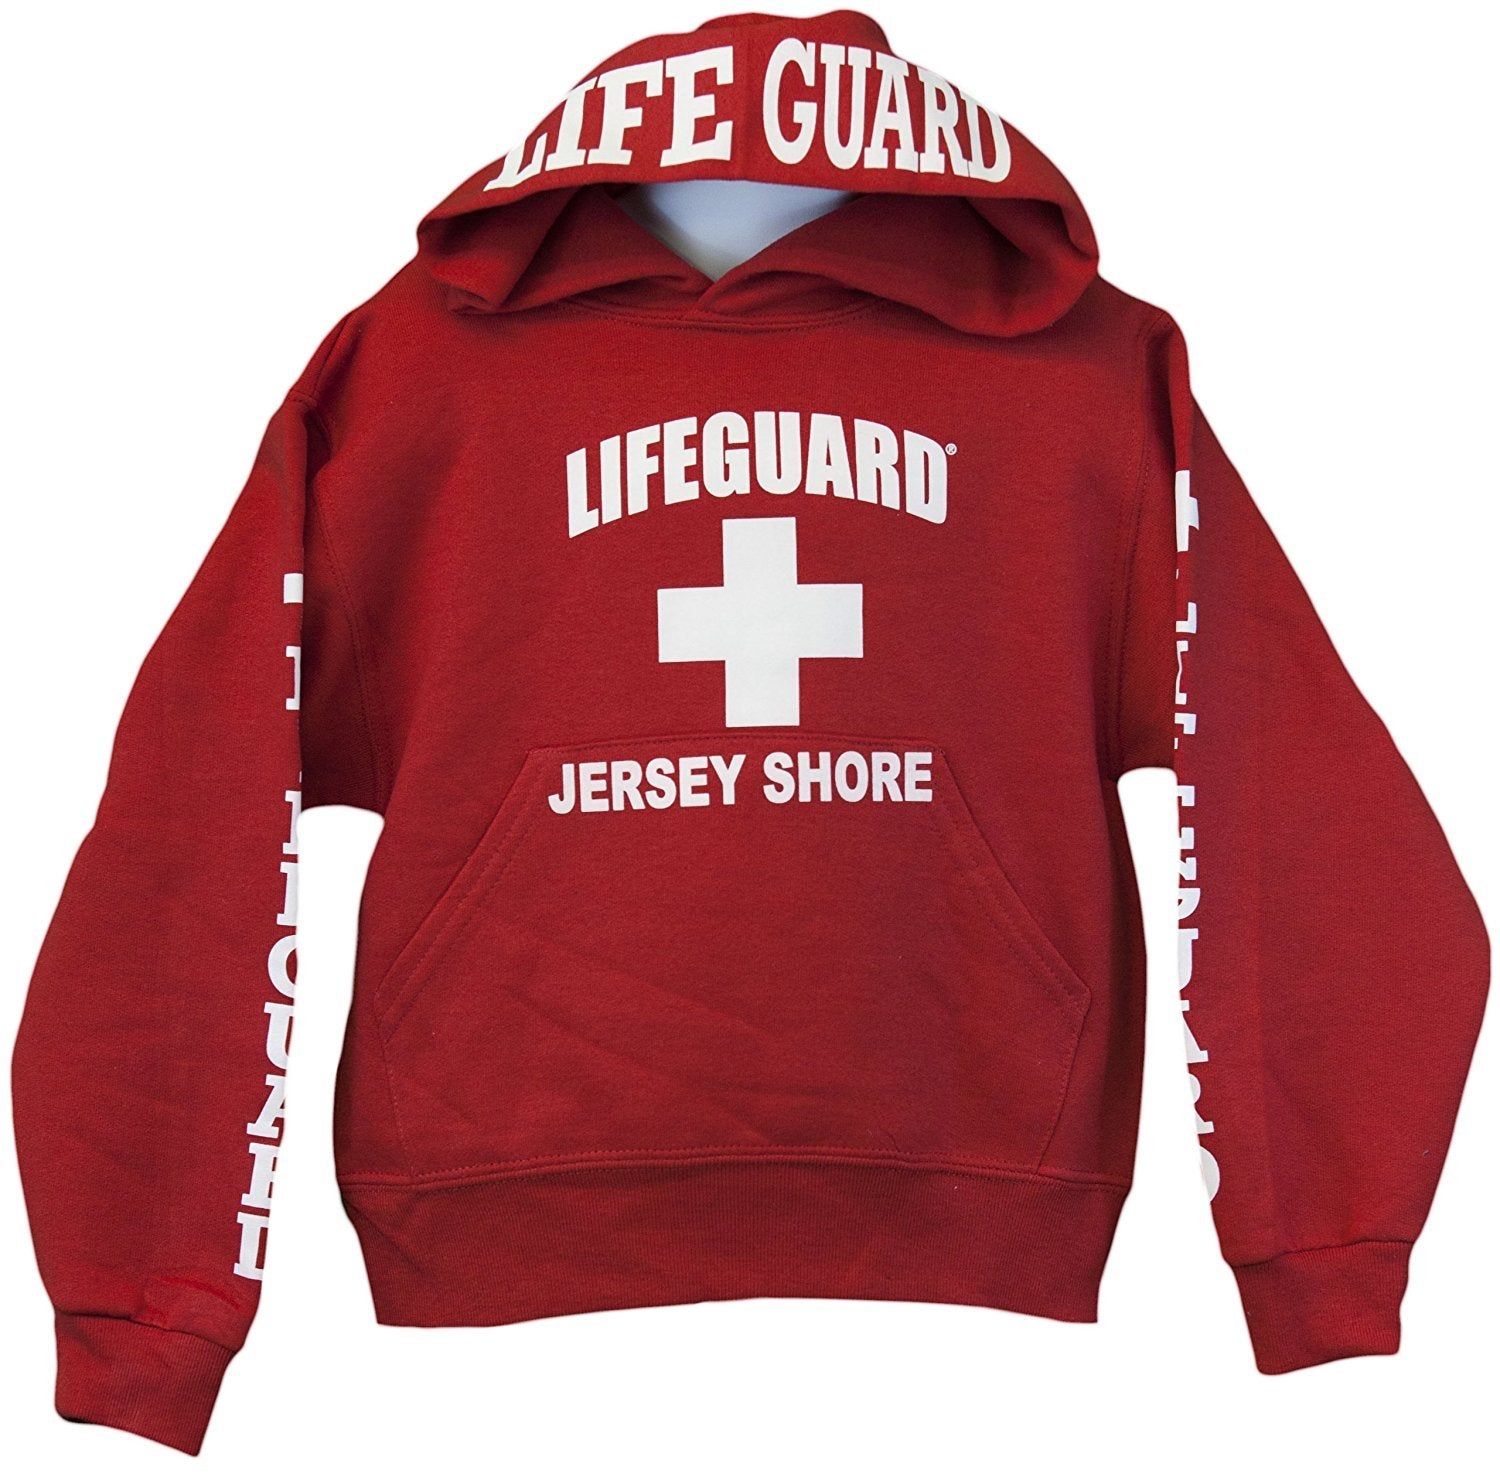 Lifeguard Kids Jersey Shore NJ Life Guard Sweatshirt Red